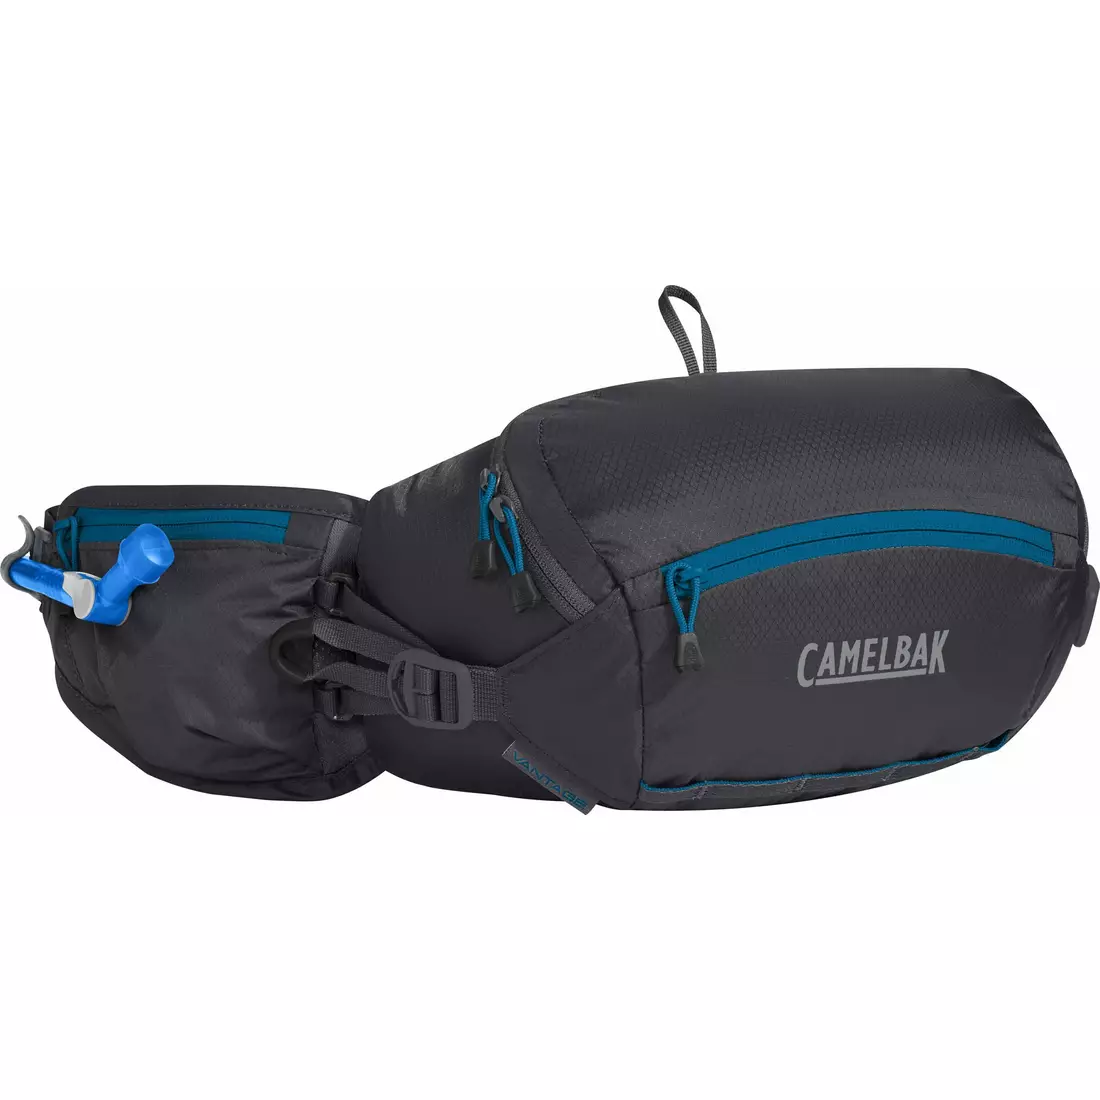 Camelbak SS18 waist bag with water bladder Vantage LR 50 oz / 1.5 L Charcoal/Grecian Blue 1486001000